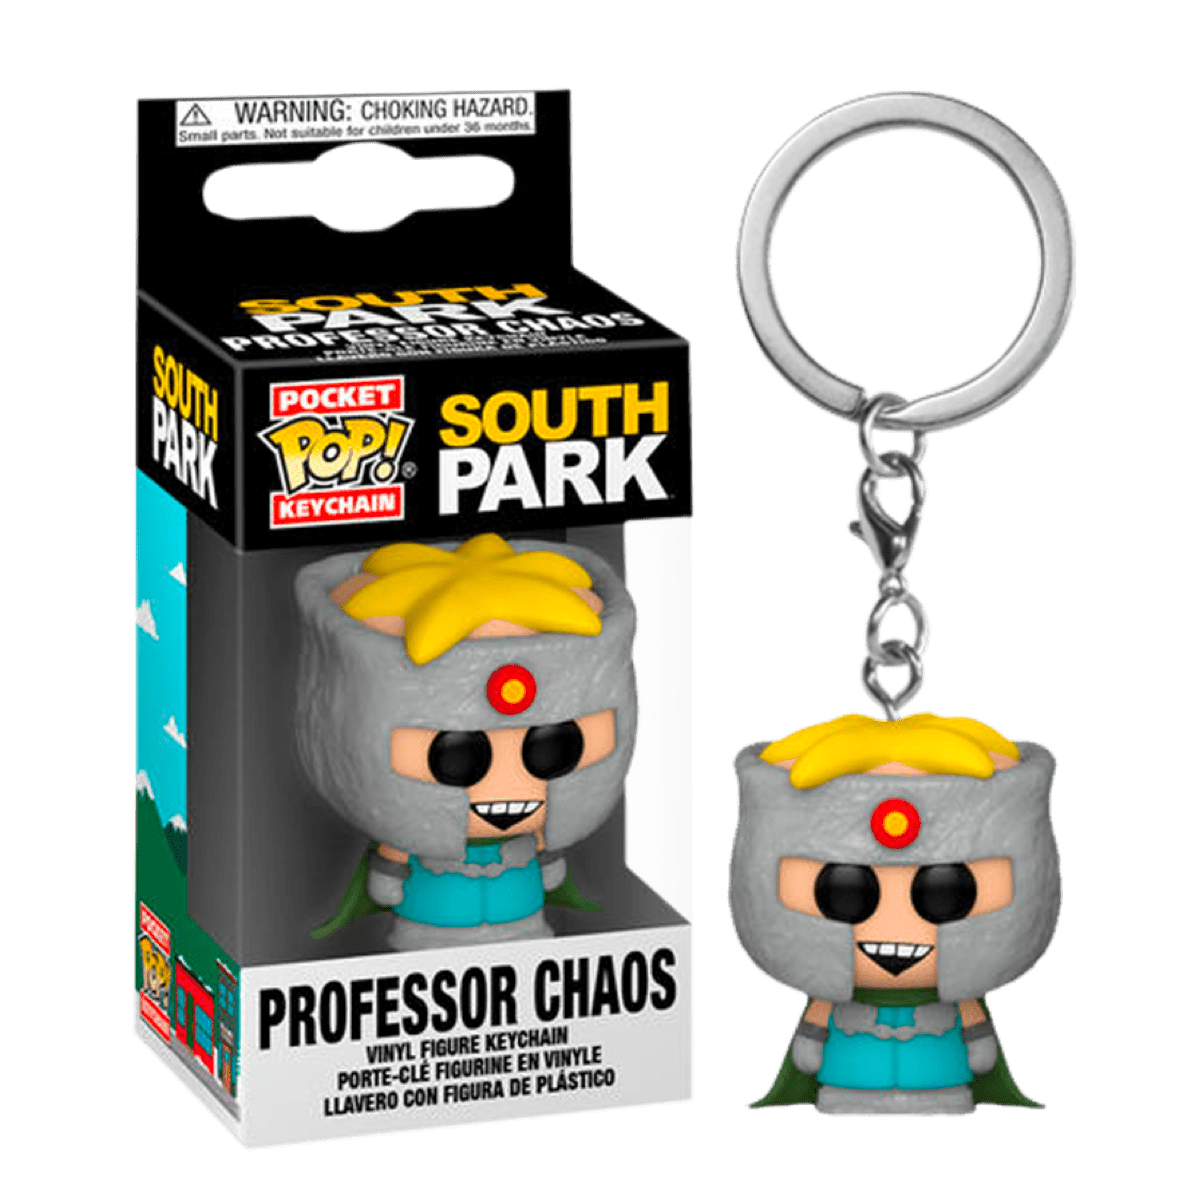 Фанко ПОП фигурка Баттерс Профессор Хаос брелок (Professor Chaos keychain) из сериала Южный Парк